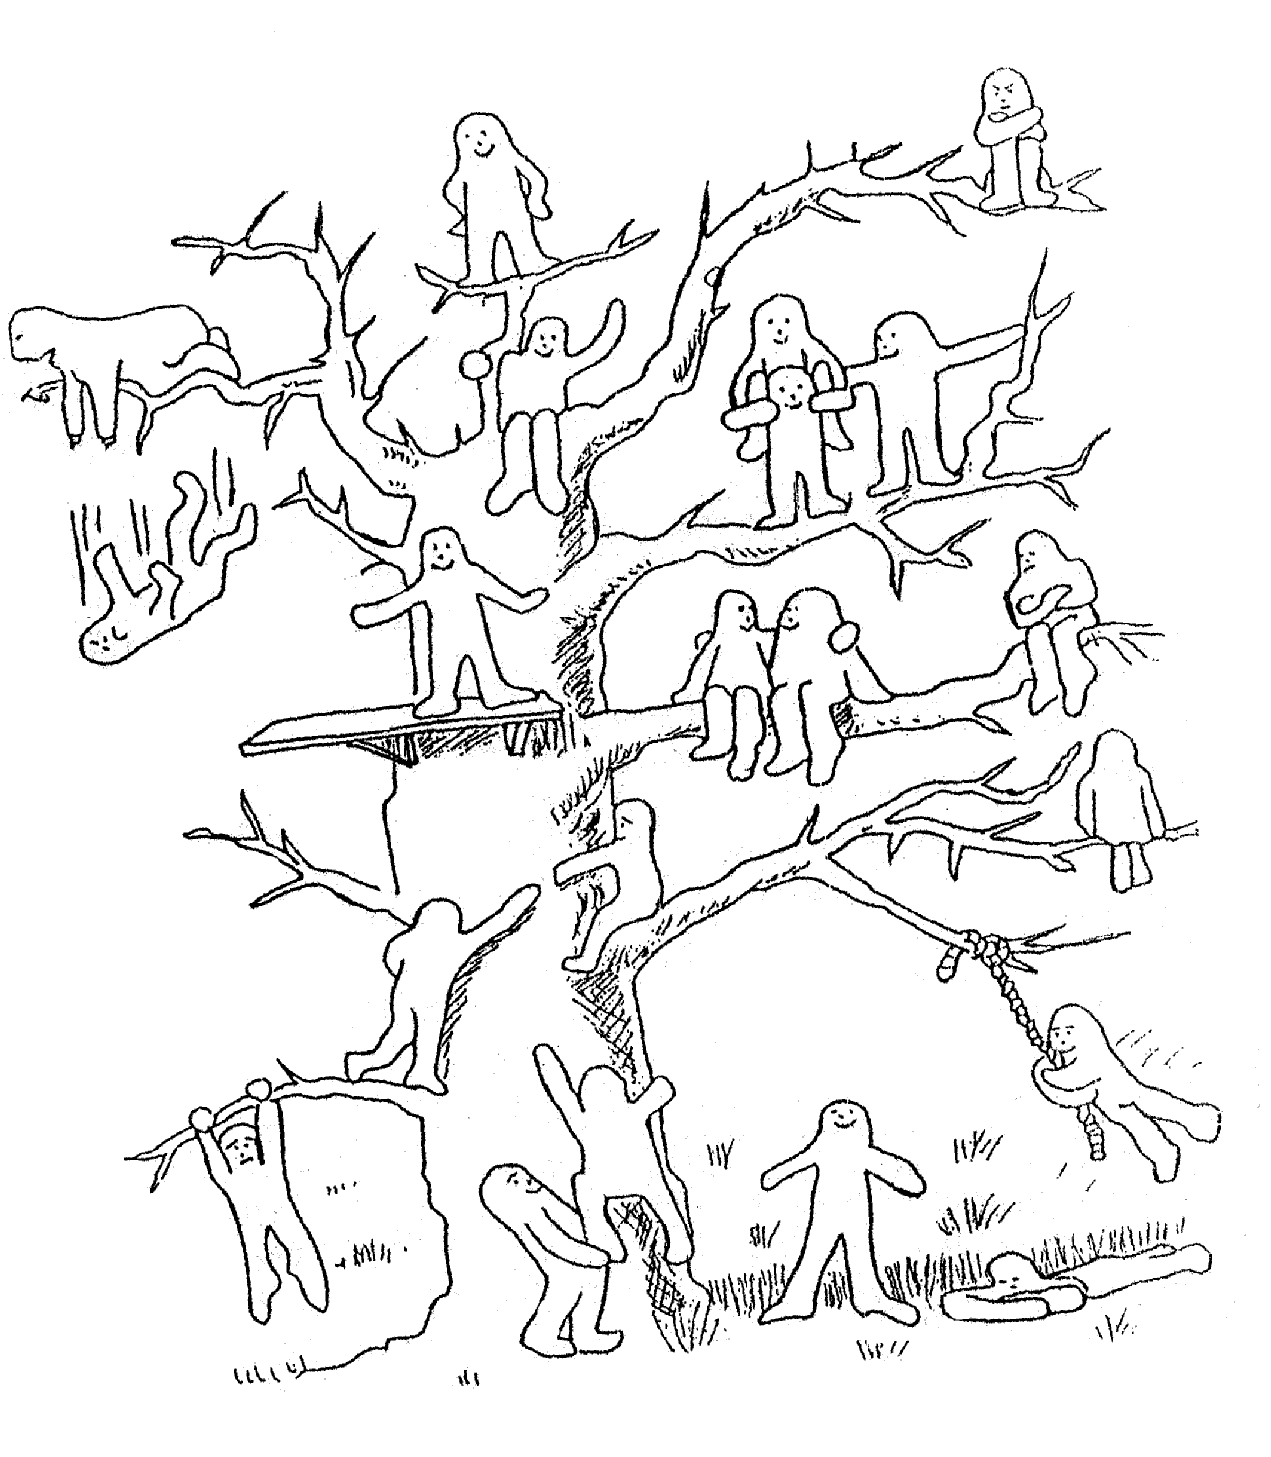 Методика Пономаренко дерево с человечками